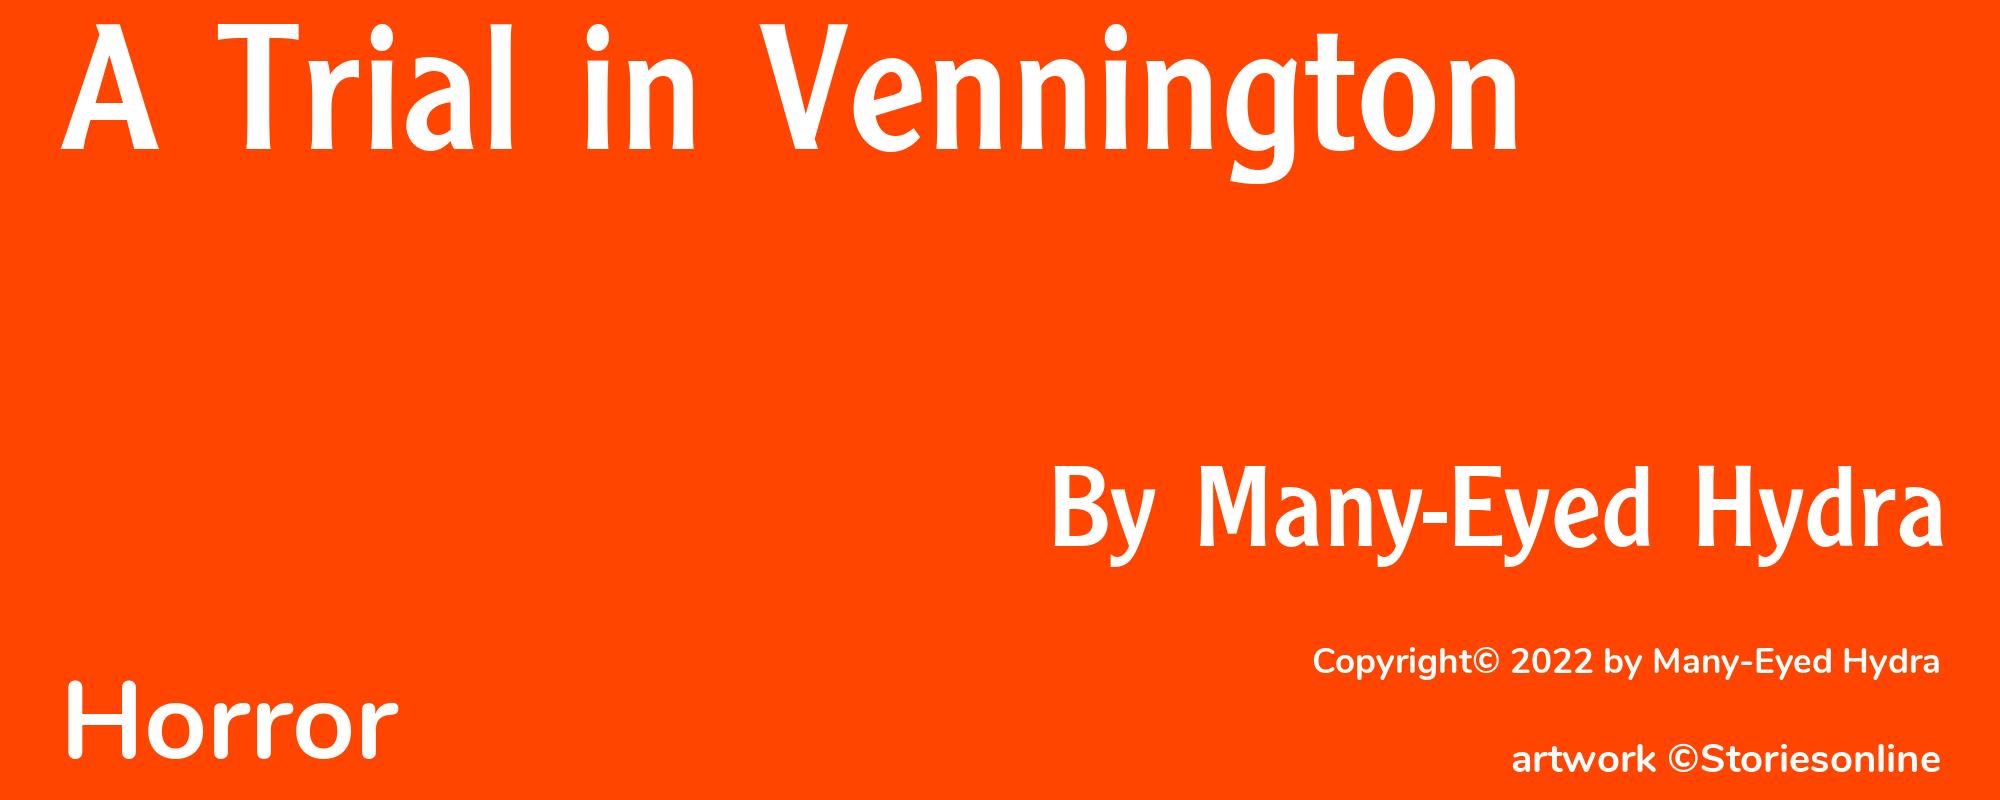 A Trial in Vennington - Cover